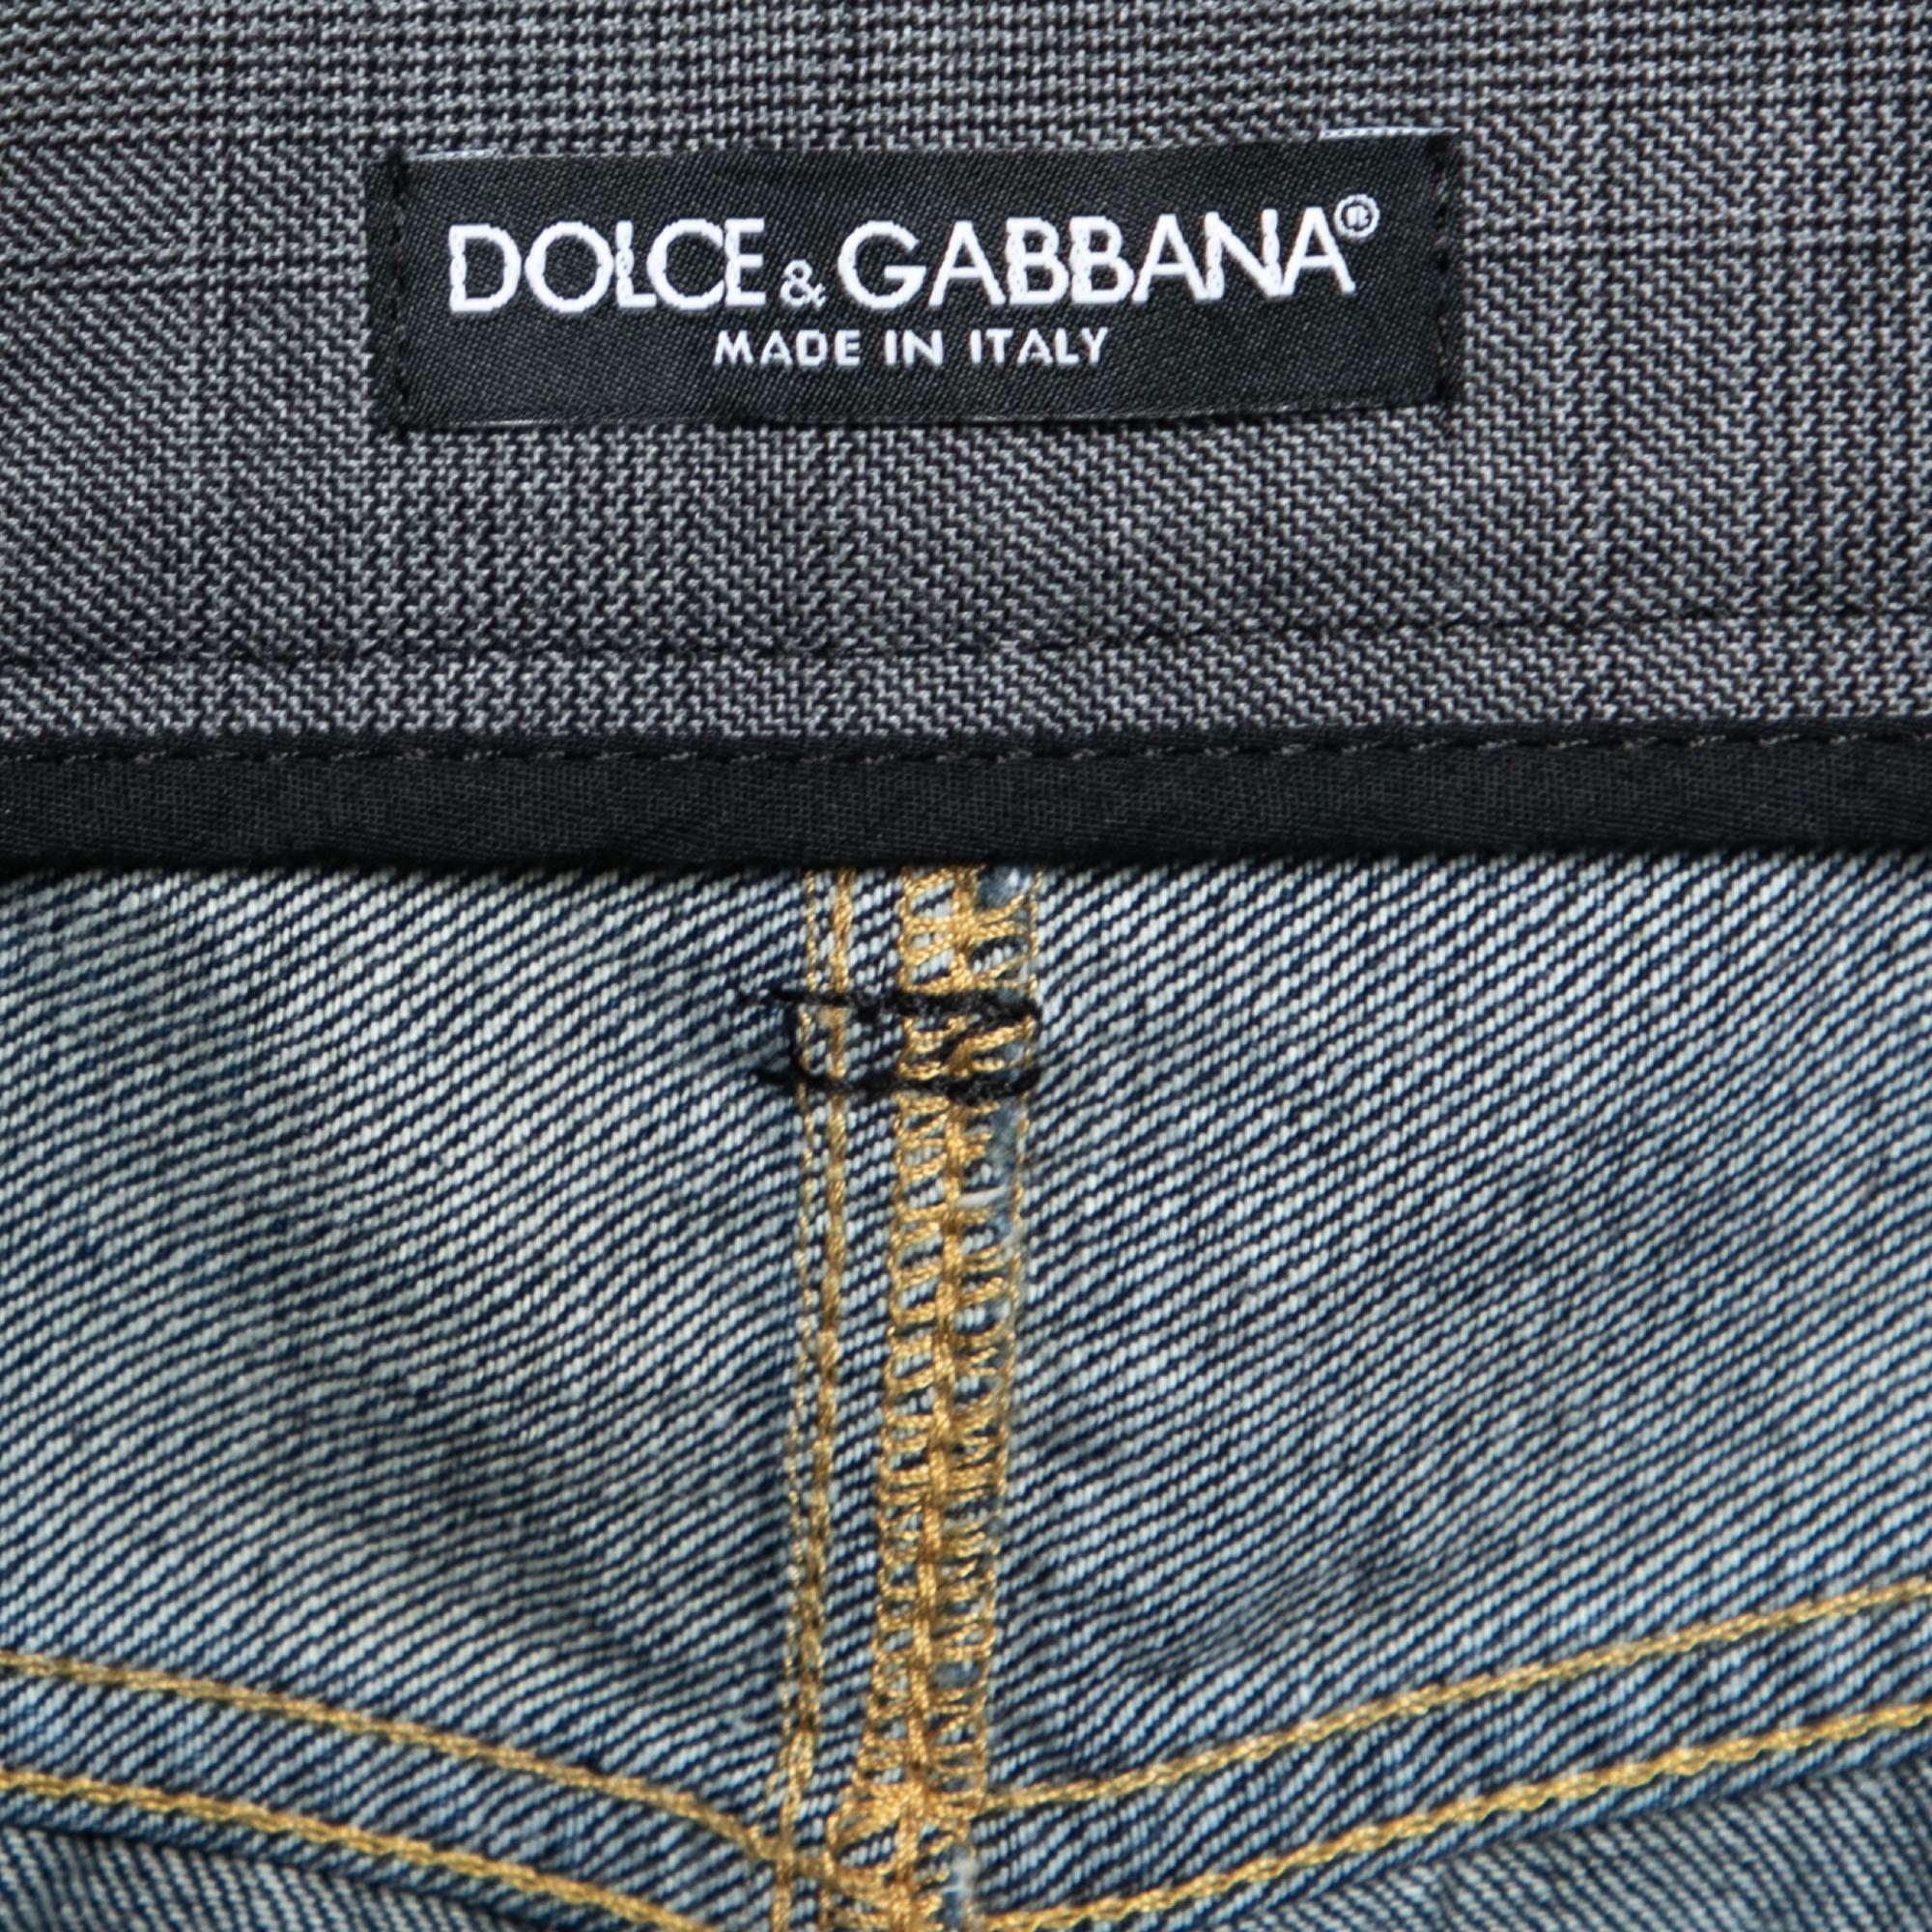  Dolce & Gabbana Checkered Cotton & Distressed Denim Paneled Pants S In Good Condition For Sale In Dubai, Al Qouz 2